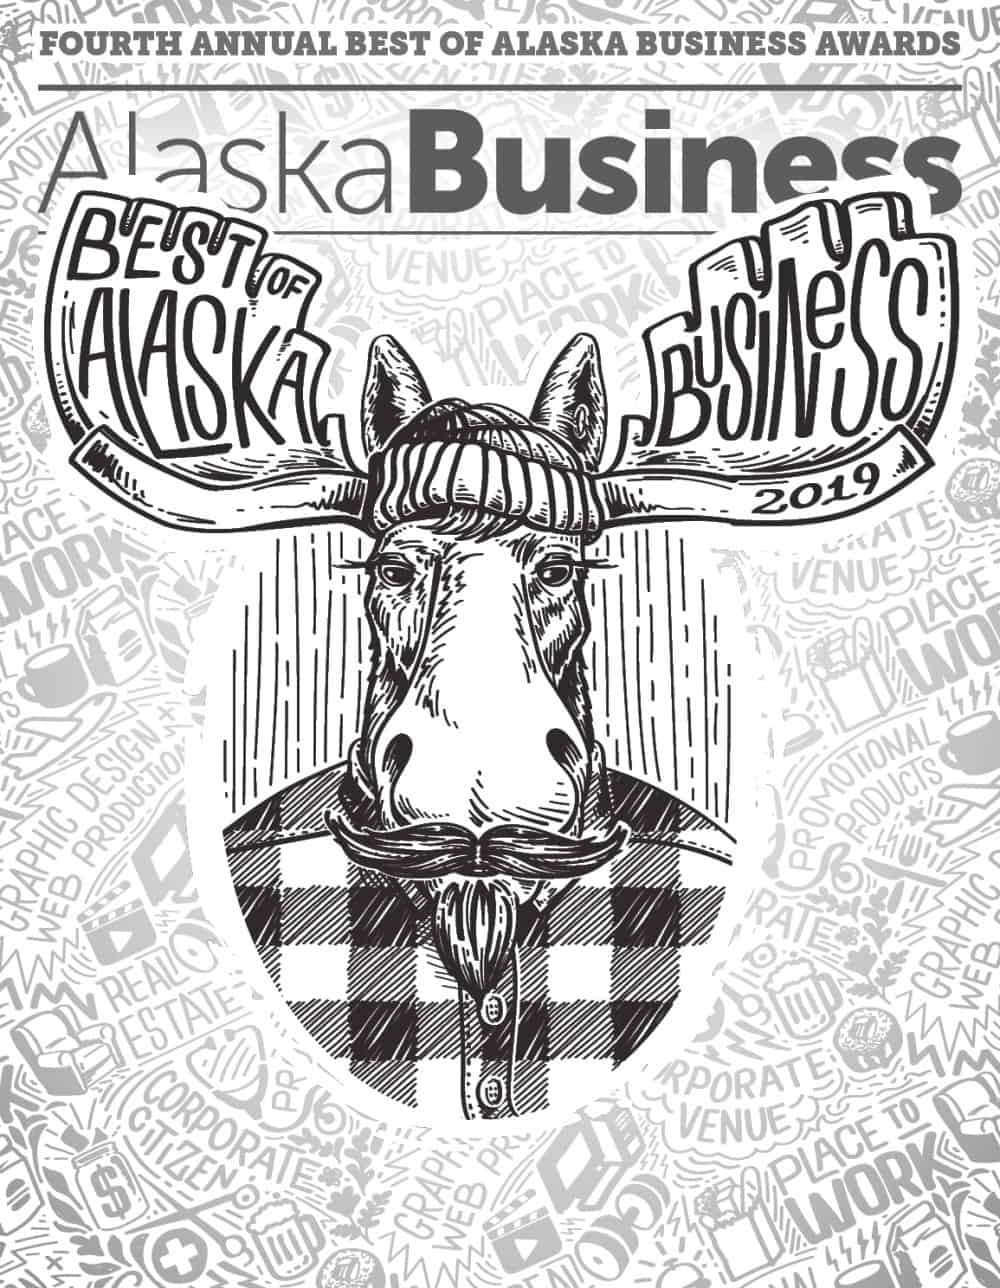 Alaska Business Magazine July 2019 cover